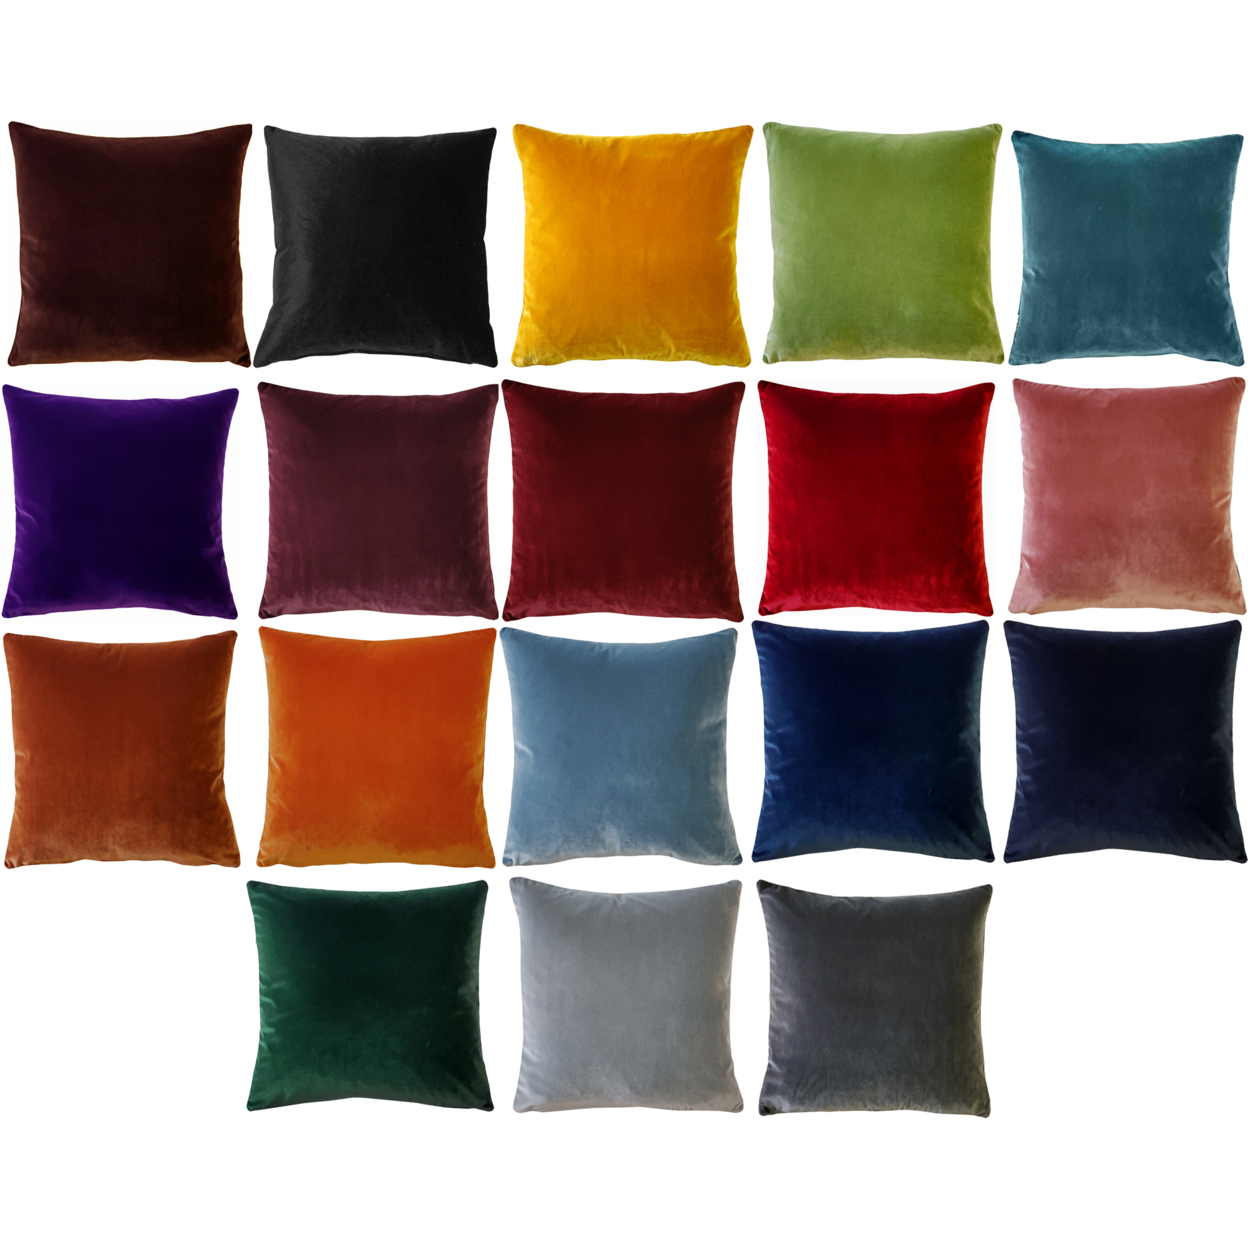 Castello Velvet Throw Pillows, Complete Pillow With Polyfill Pillow Insert (18 Colors, 3 Sizes) - Sedona Orange, 17x17